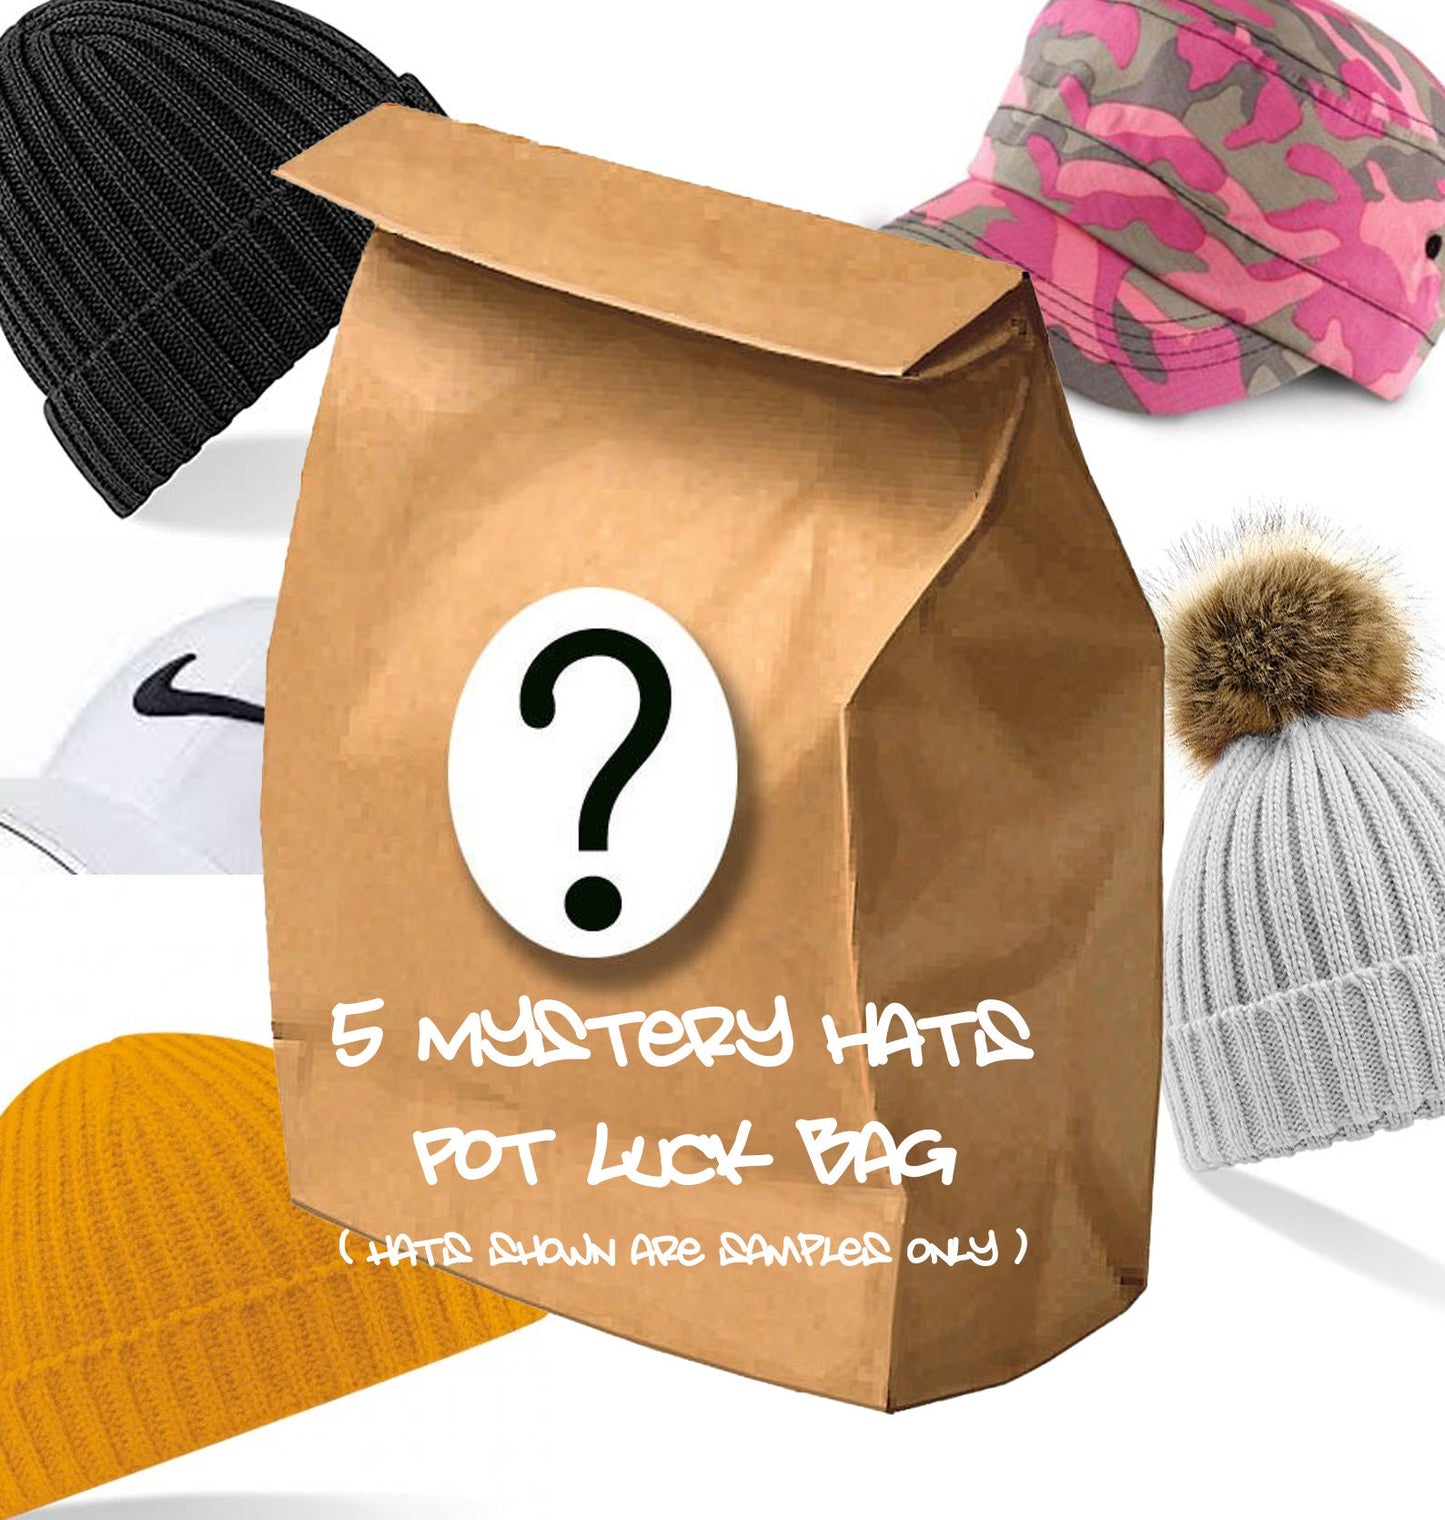 5 x Mystery Hats, Pot Luck Surprise Bag, Baseball Caps and Beanies